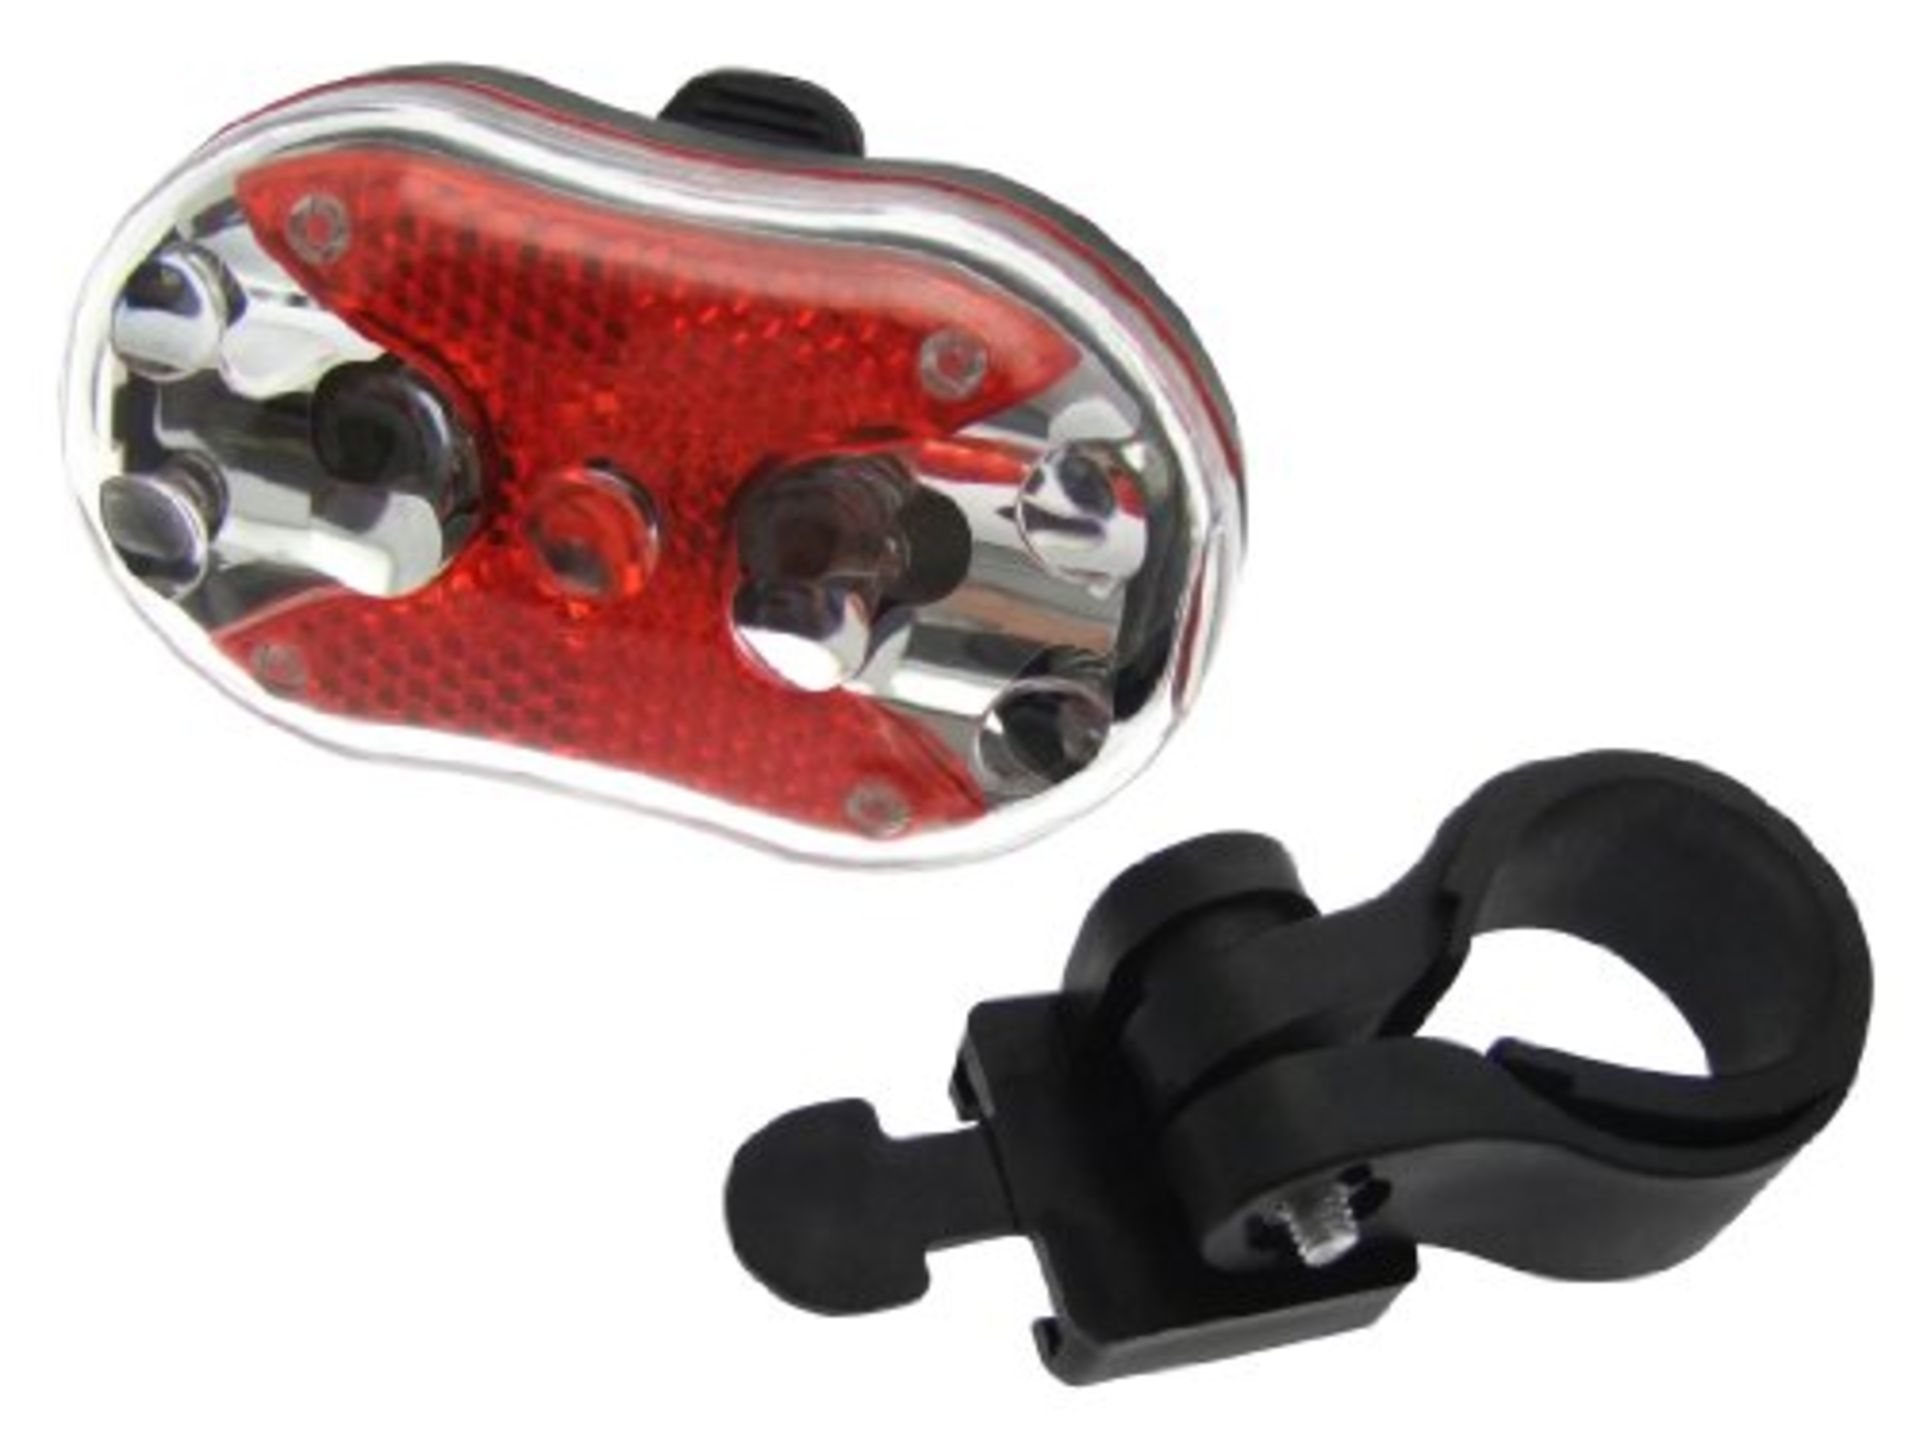 V *TRADE QTY* Brand New 9 LED Rear Bicycle Light - 7 Modes - Mounting Bracket - Belt clip X 12